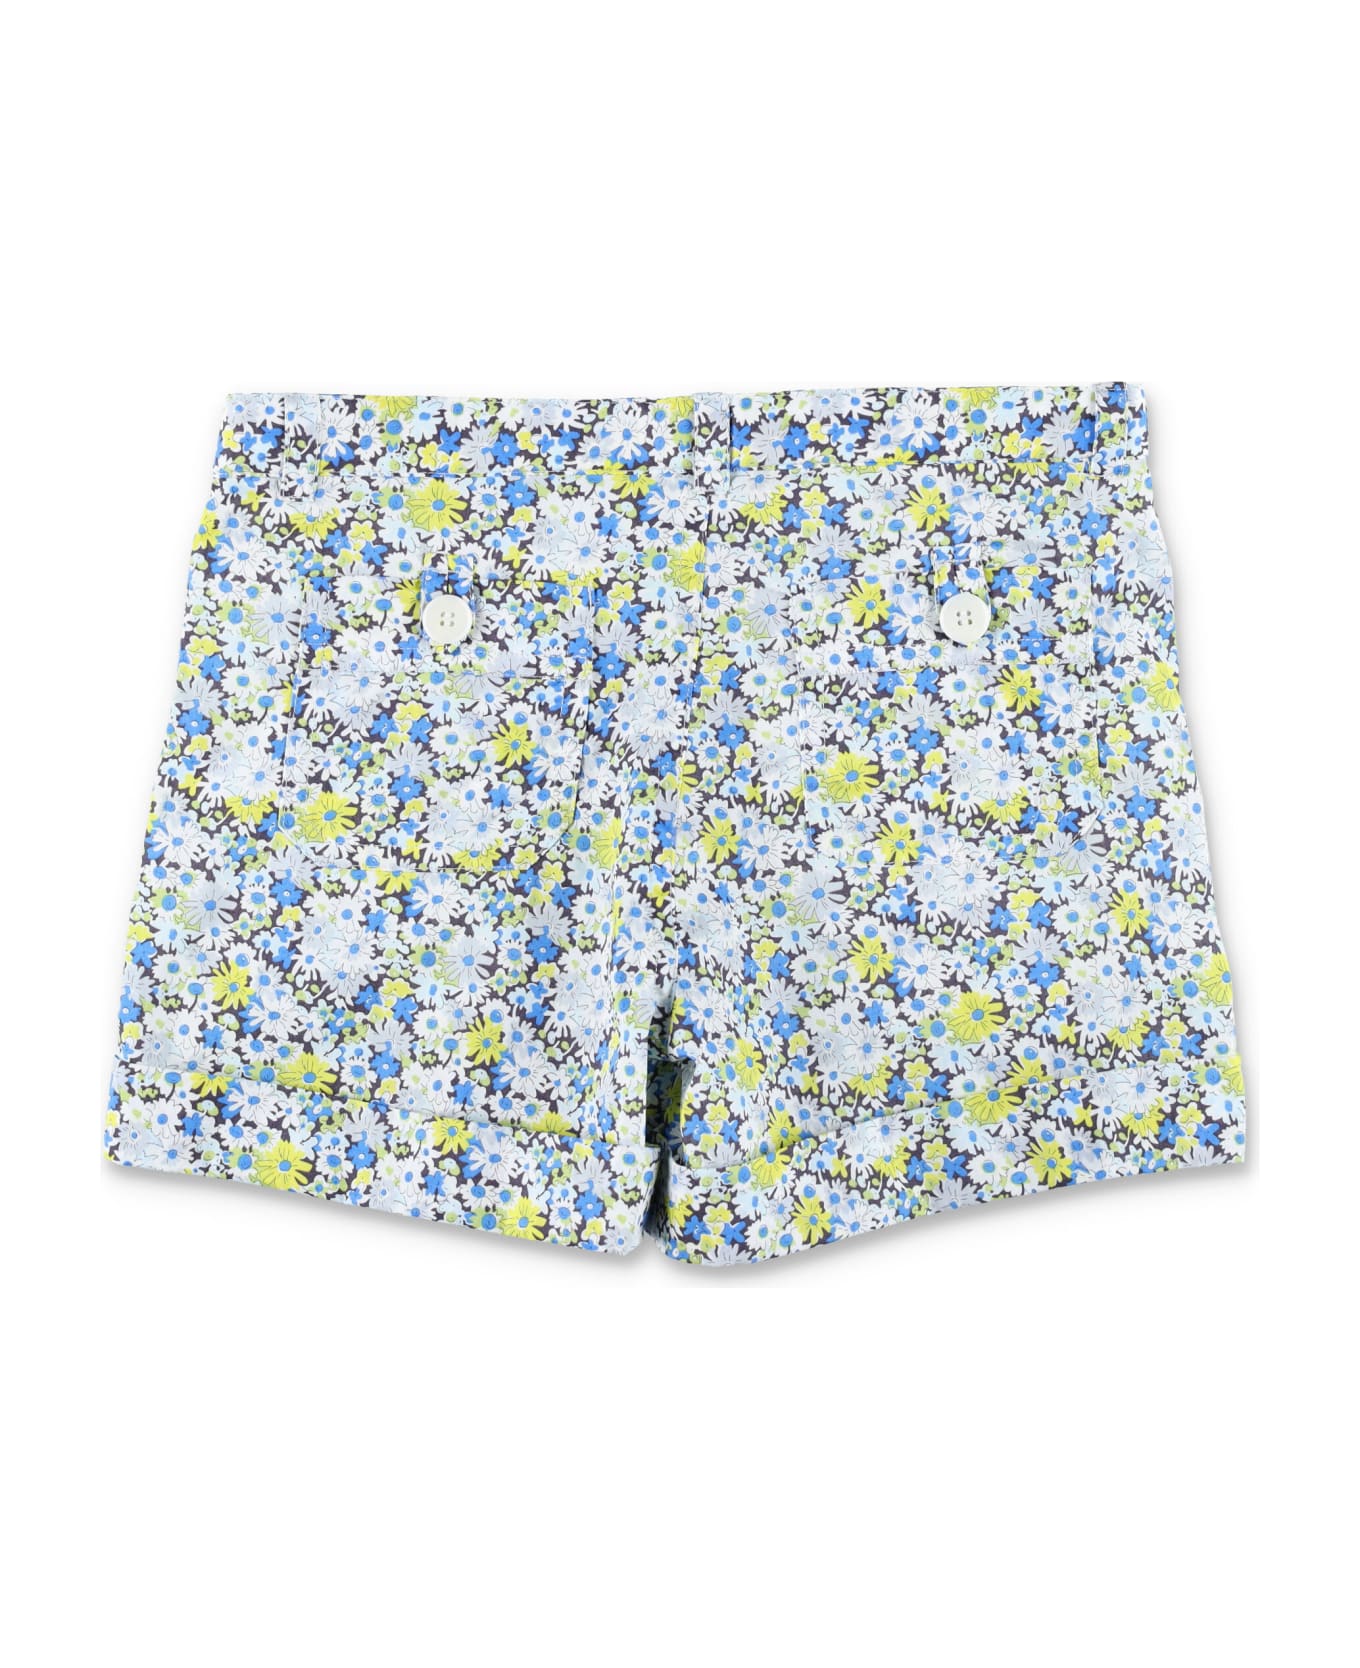 Bonpoint Calista Shorts - BLUE FLOWERS